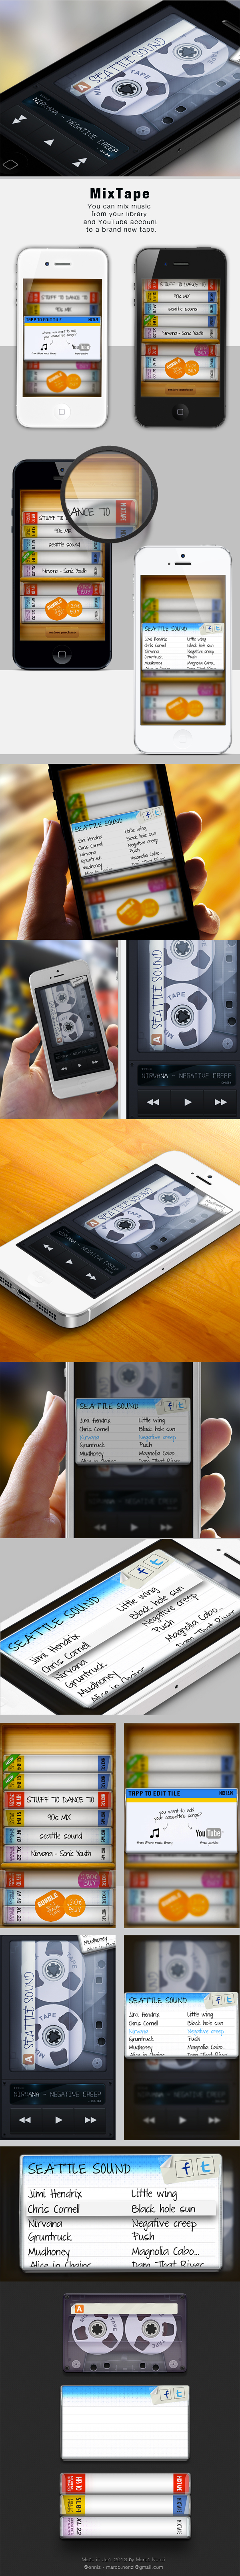 iOS音乐应用MixTape手机界面设计